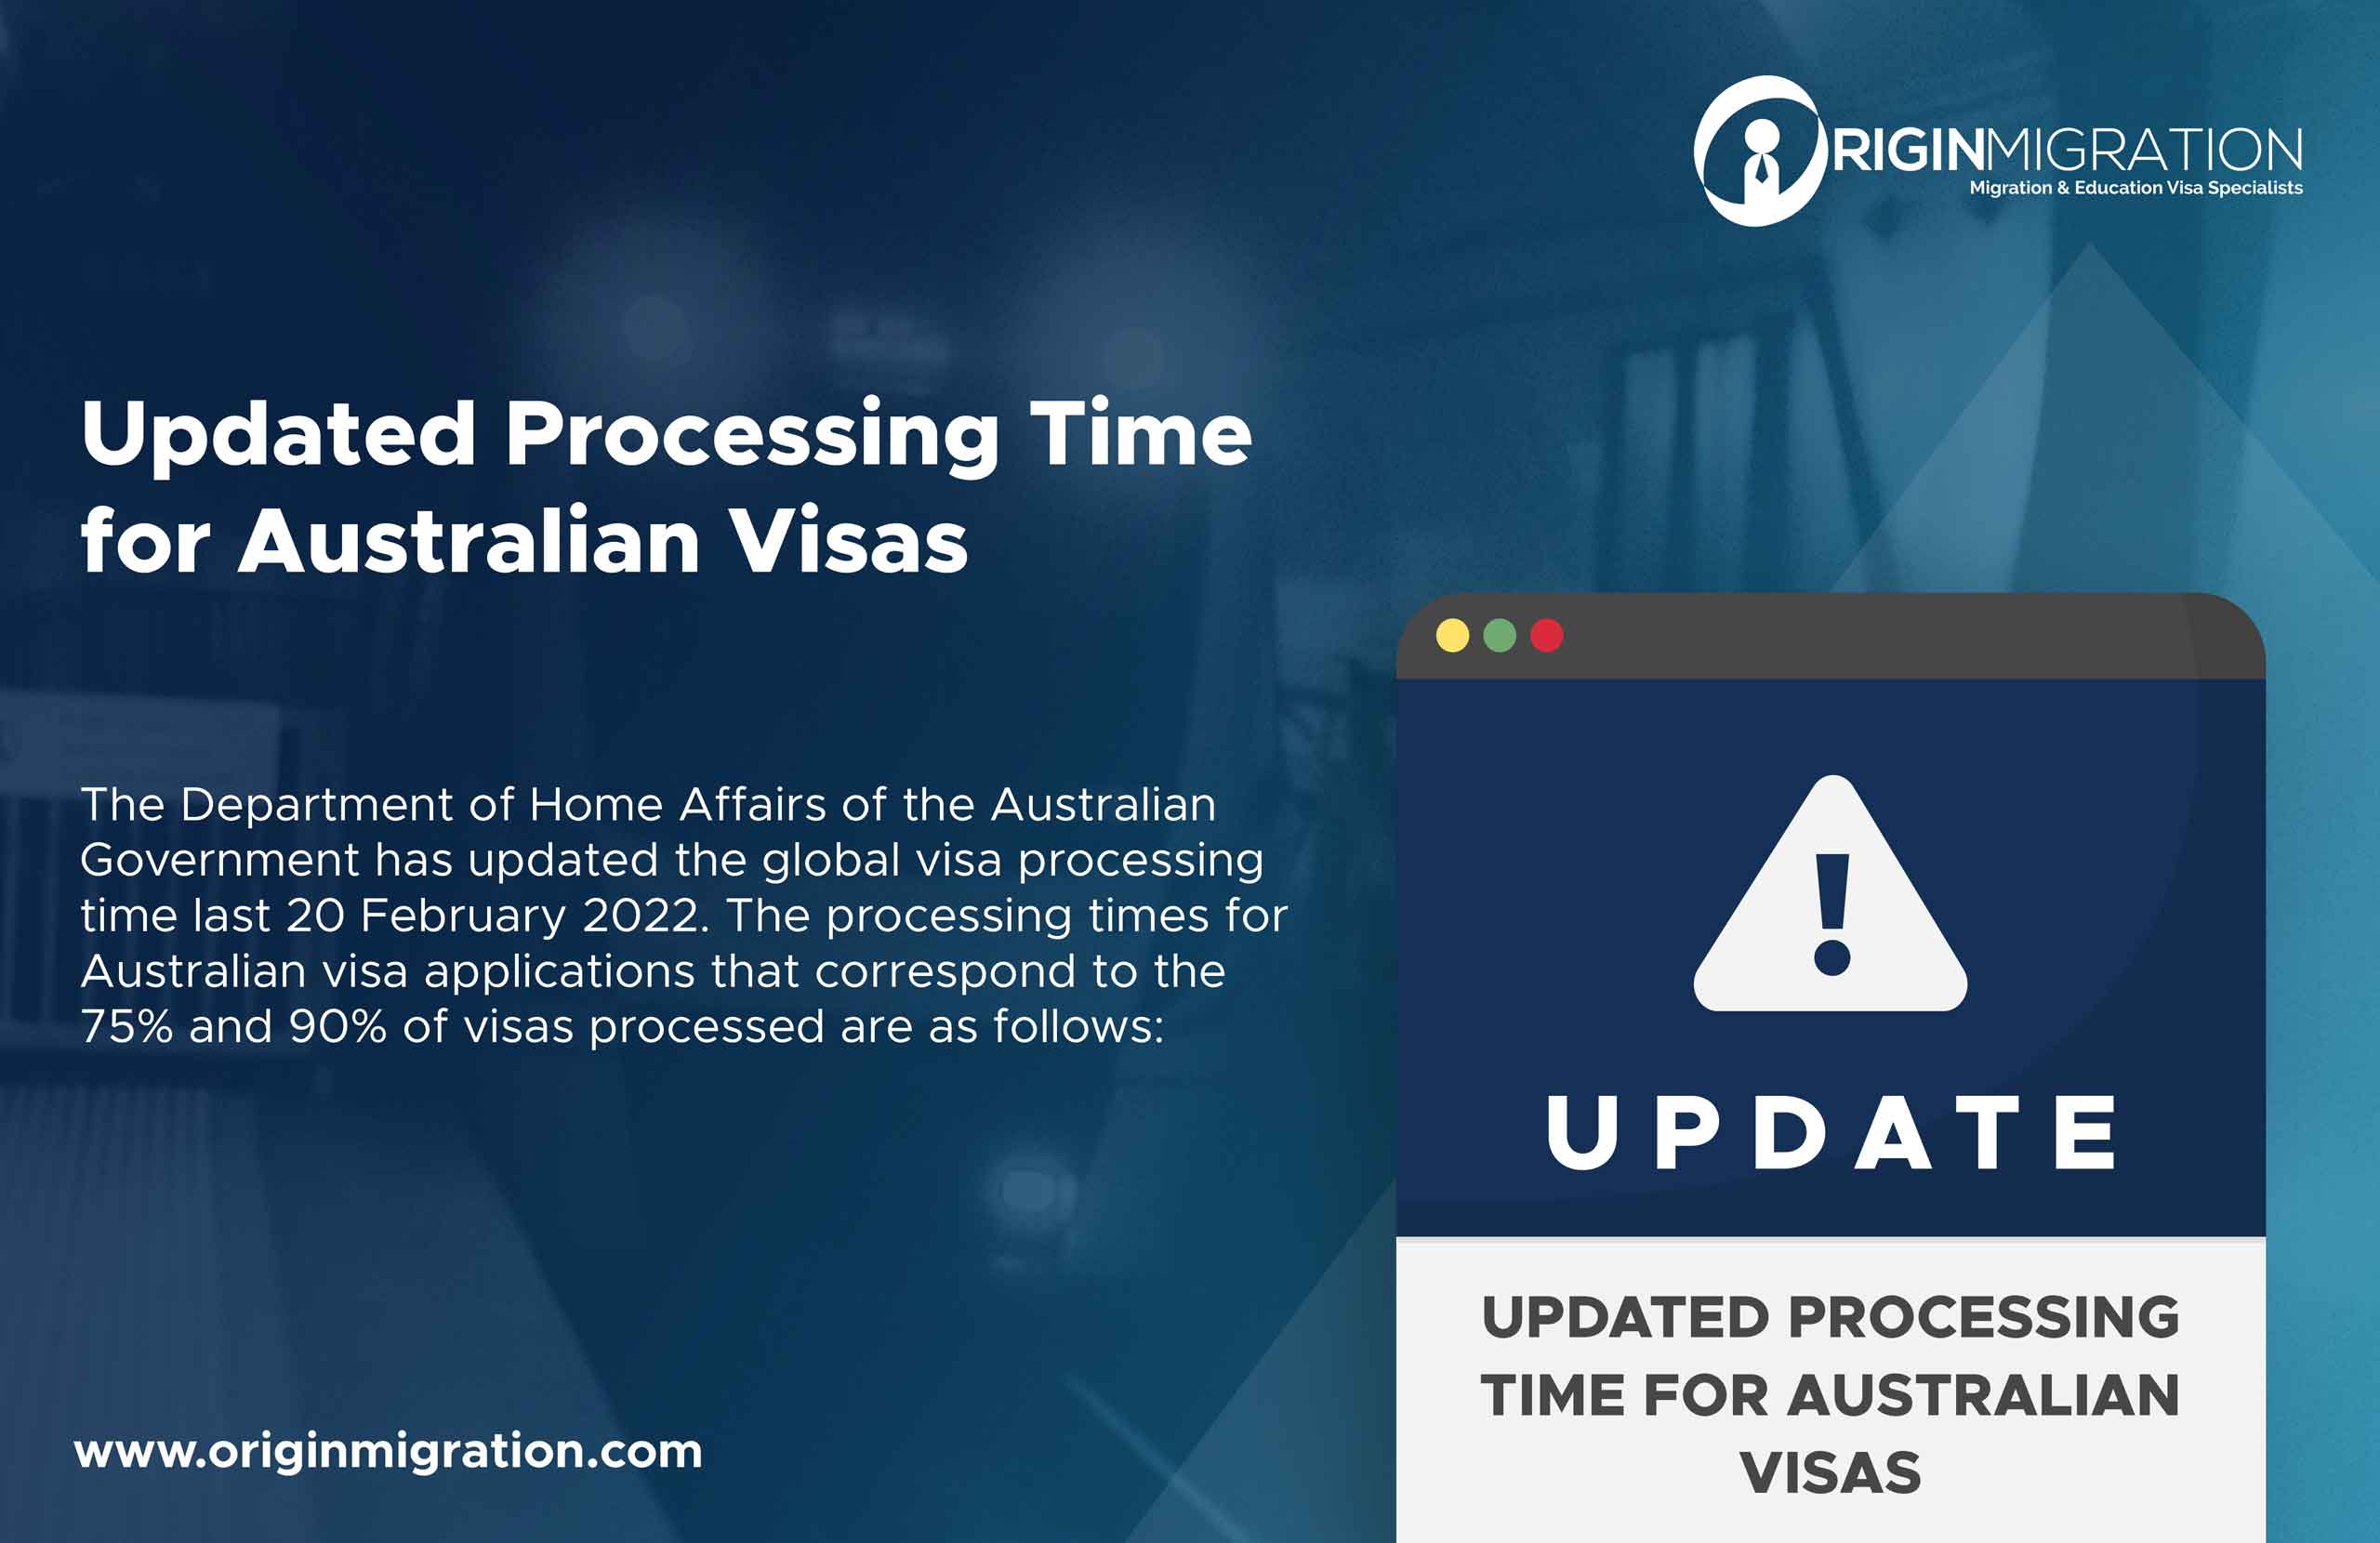 australia tourist visa processing time philippines